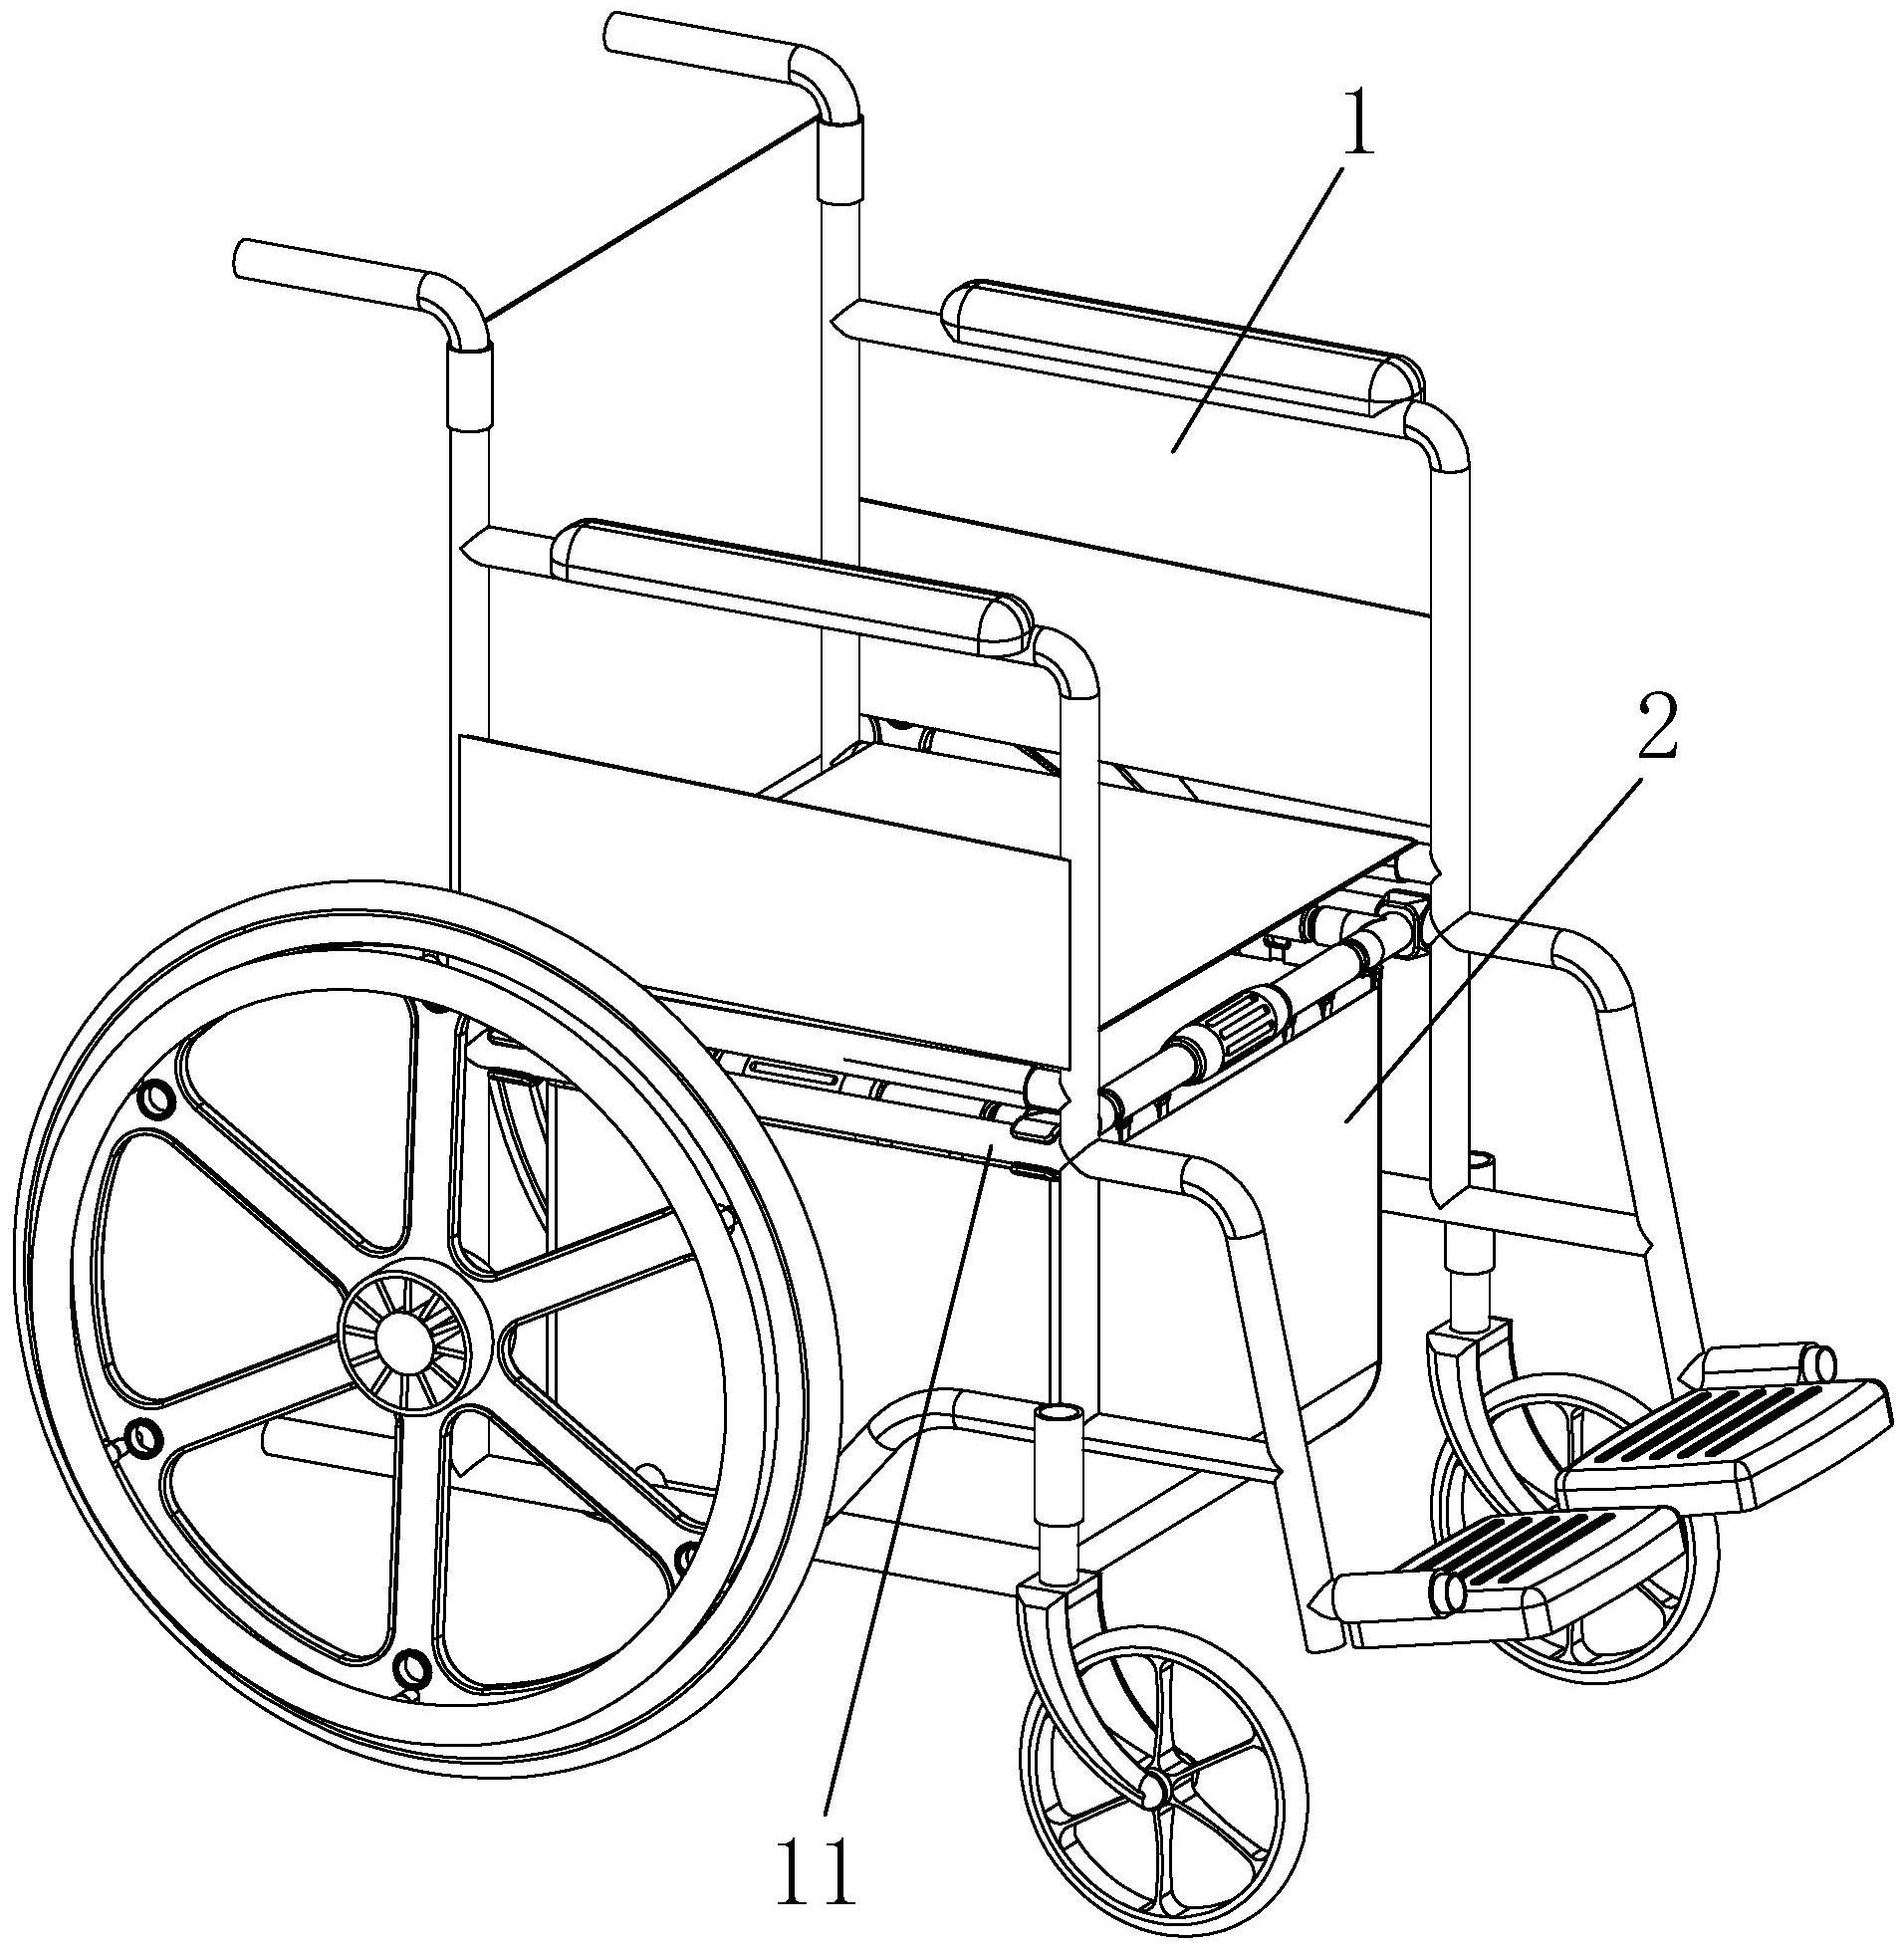 cn213047762u_一种底部具有储存空间的轮椅